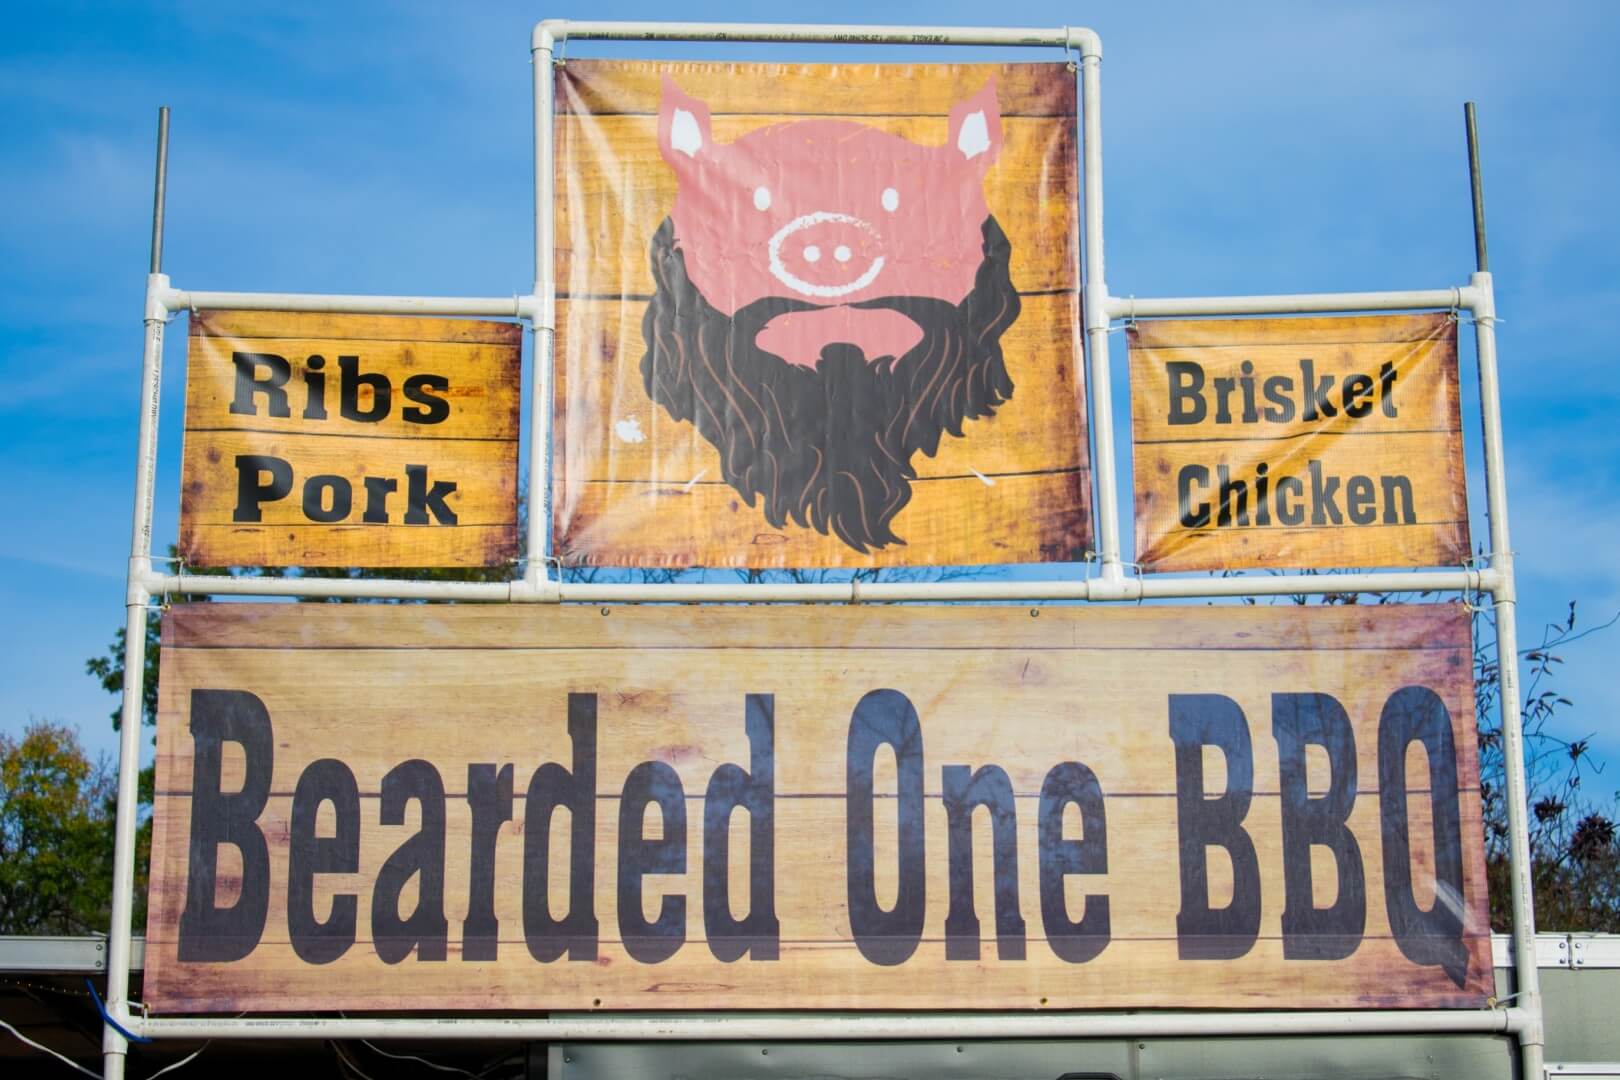 The Best New Jersey Food Trucks - Bearded One BBQ